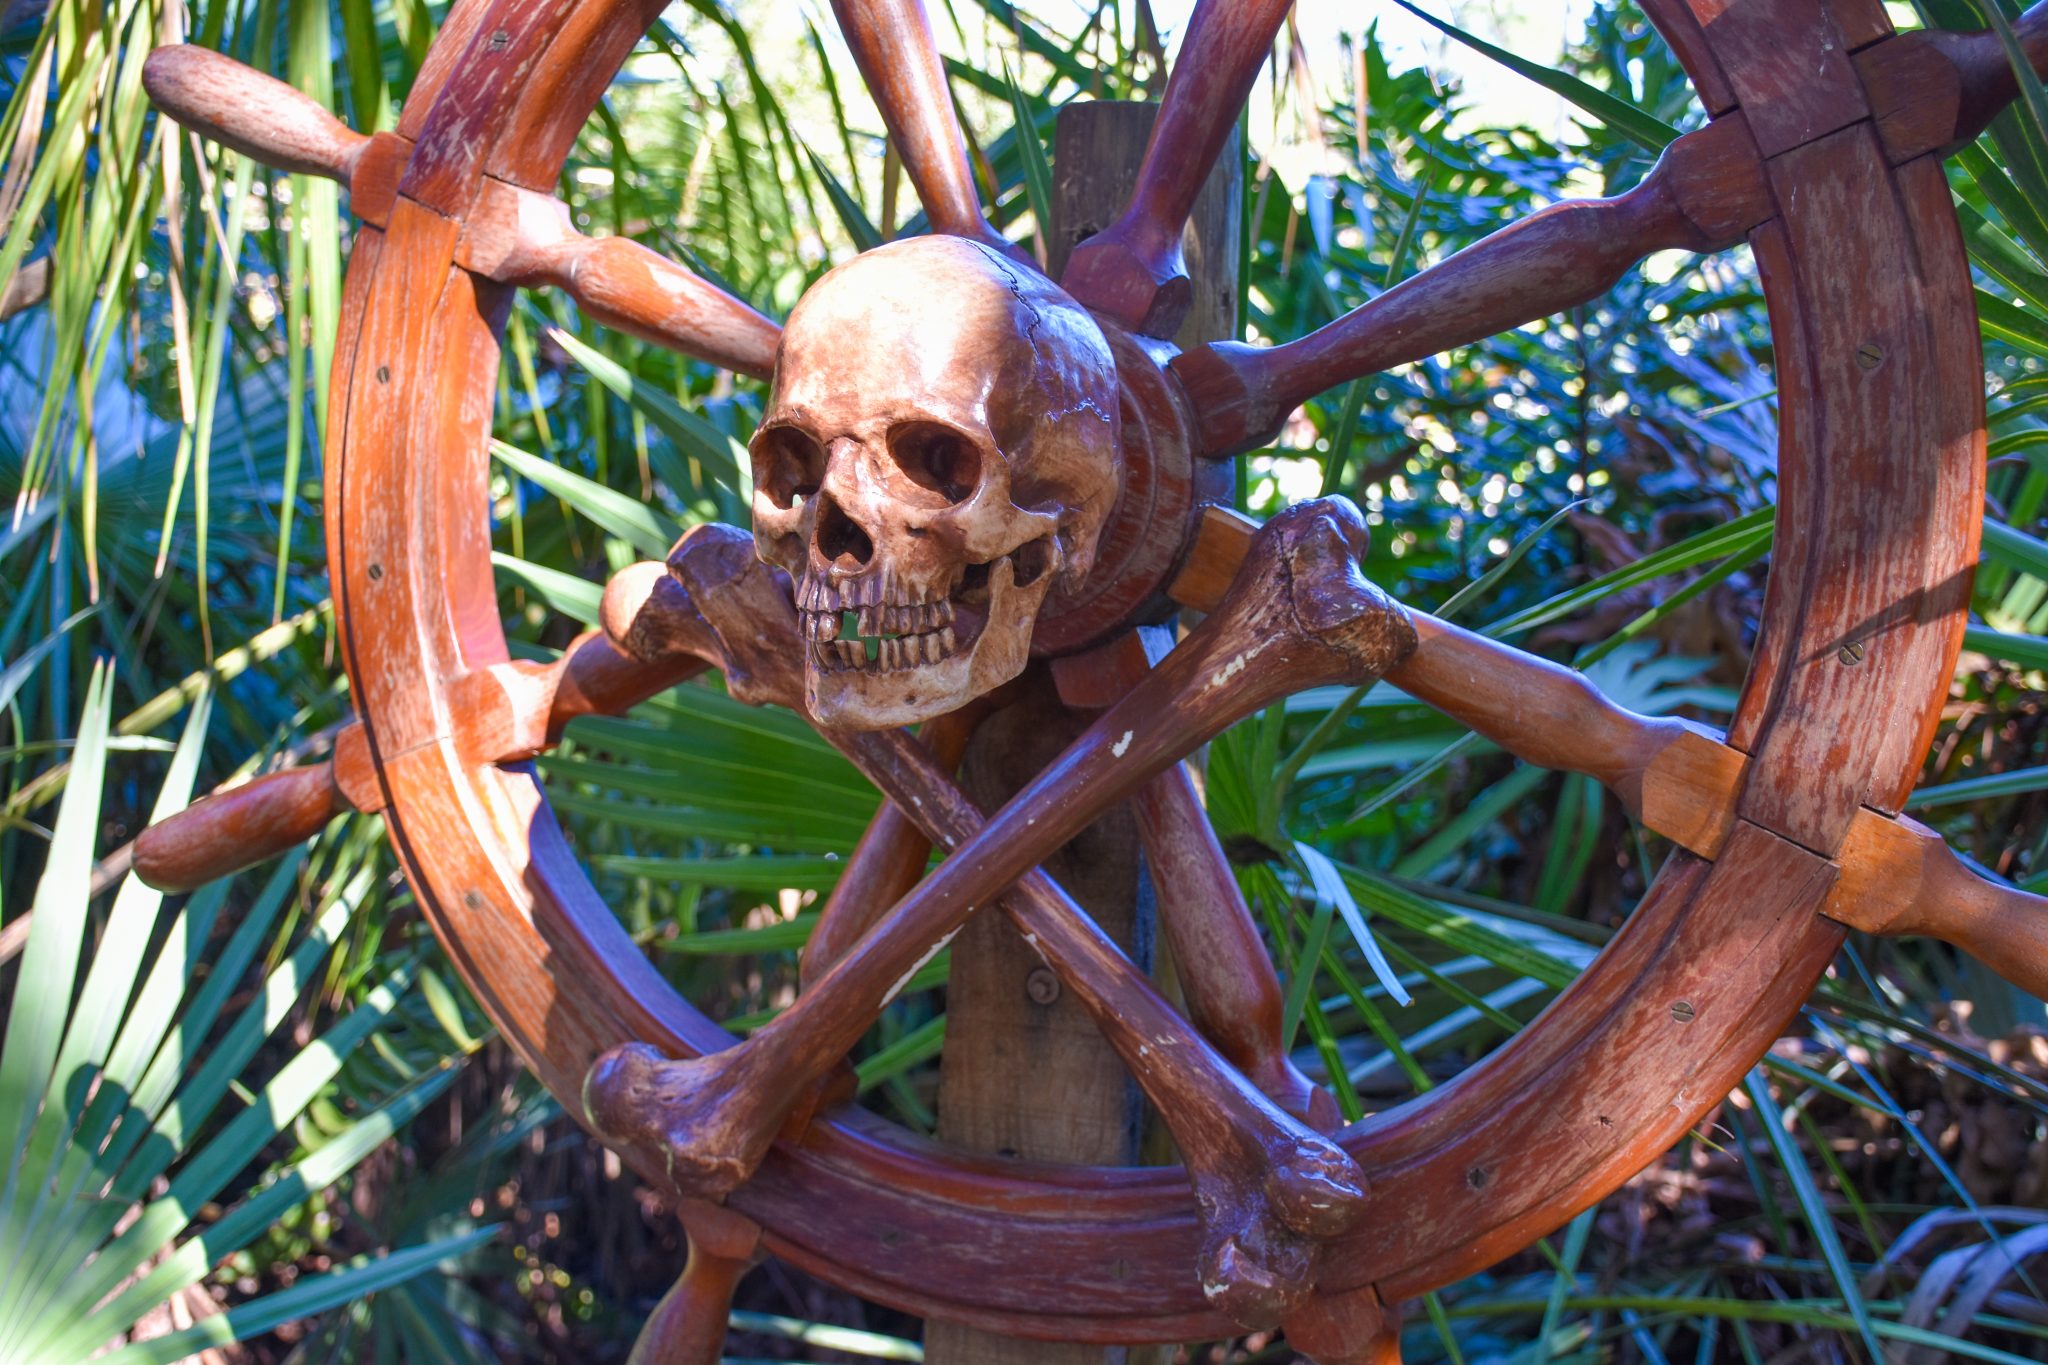 Skull and crossbones pirate steering wheel decoration